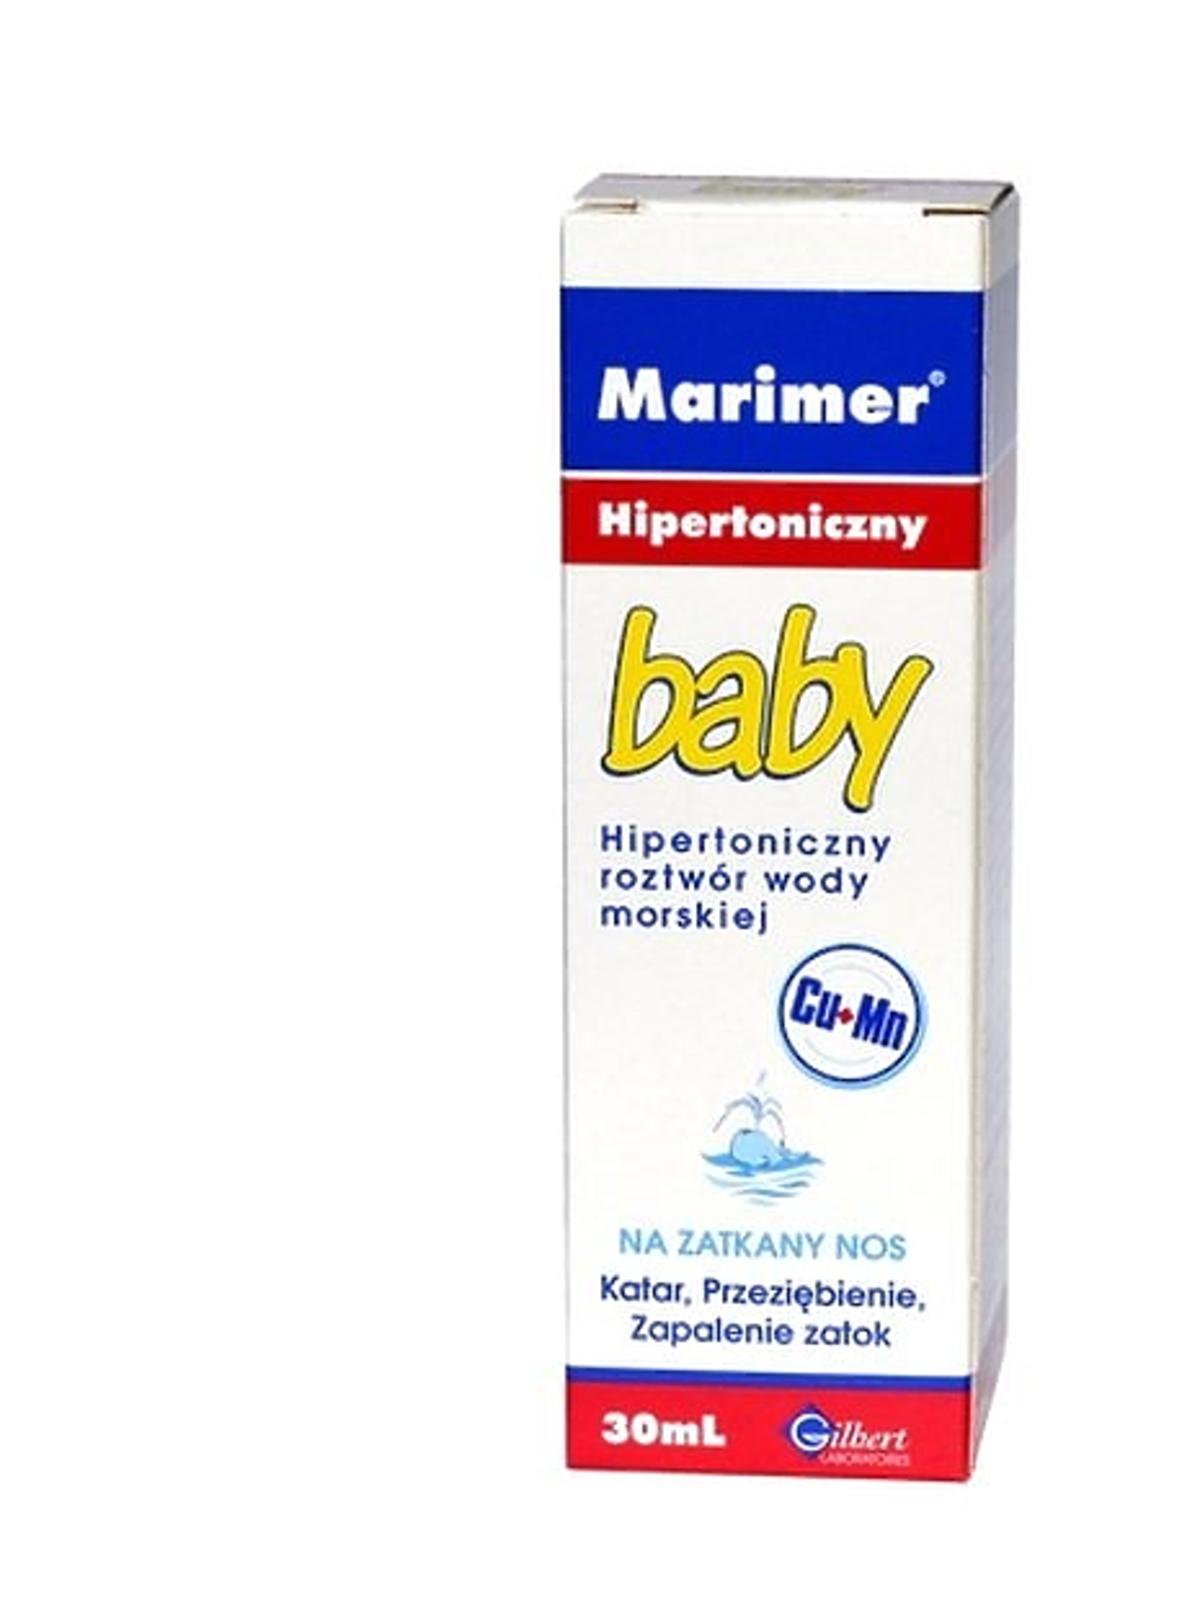 woda morska do nosa Marimer Baby hipertoniczny roztwór wody morskiej, Laboratoires Glibert, cena ok. 17 zł/30 ml